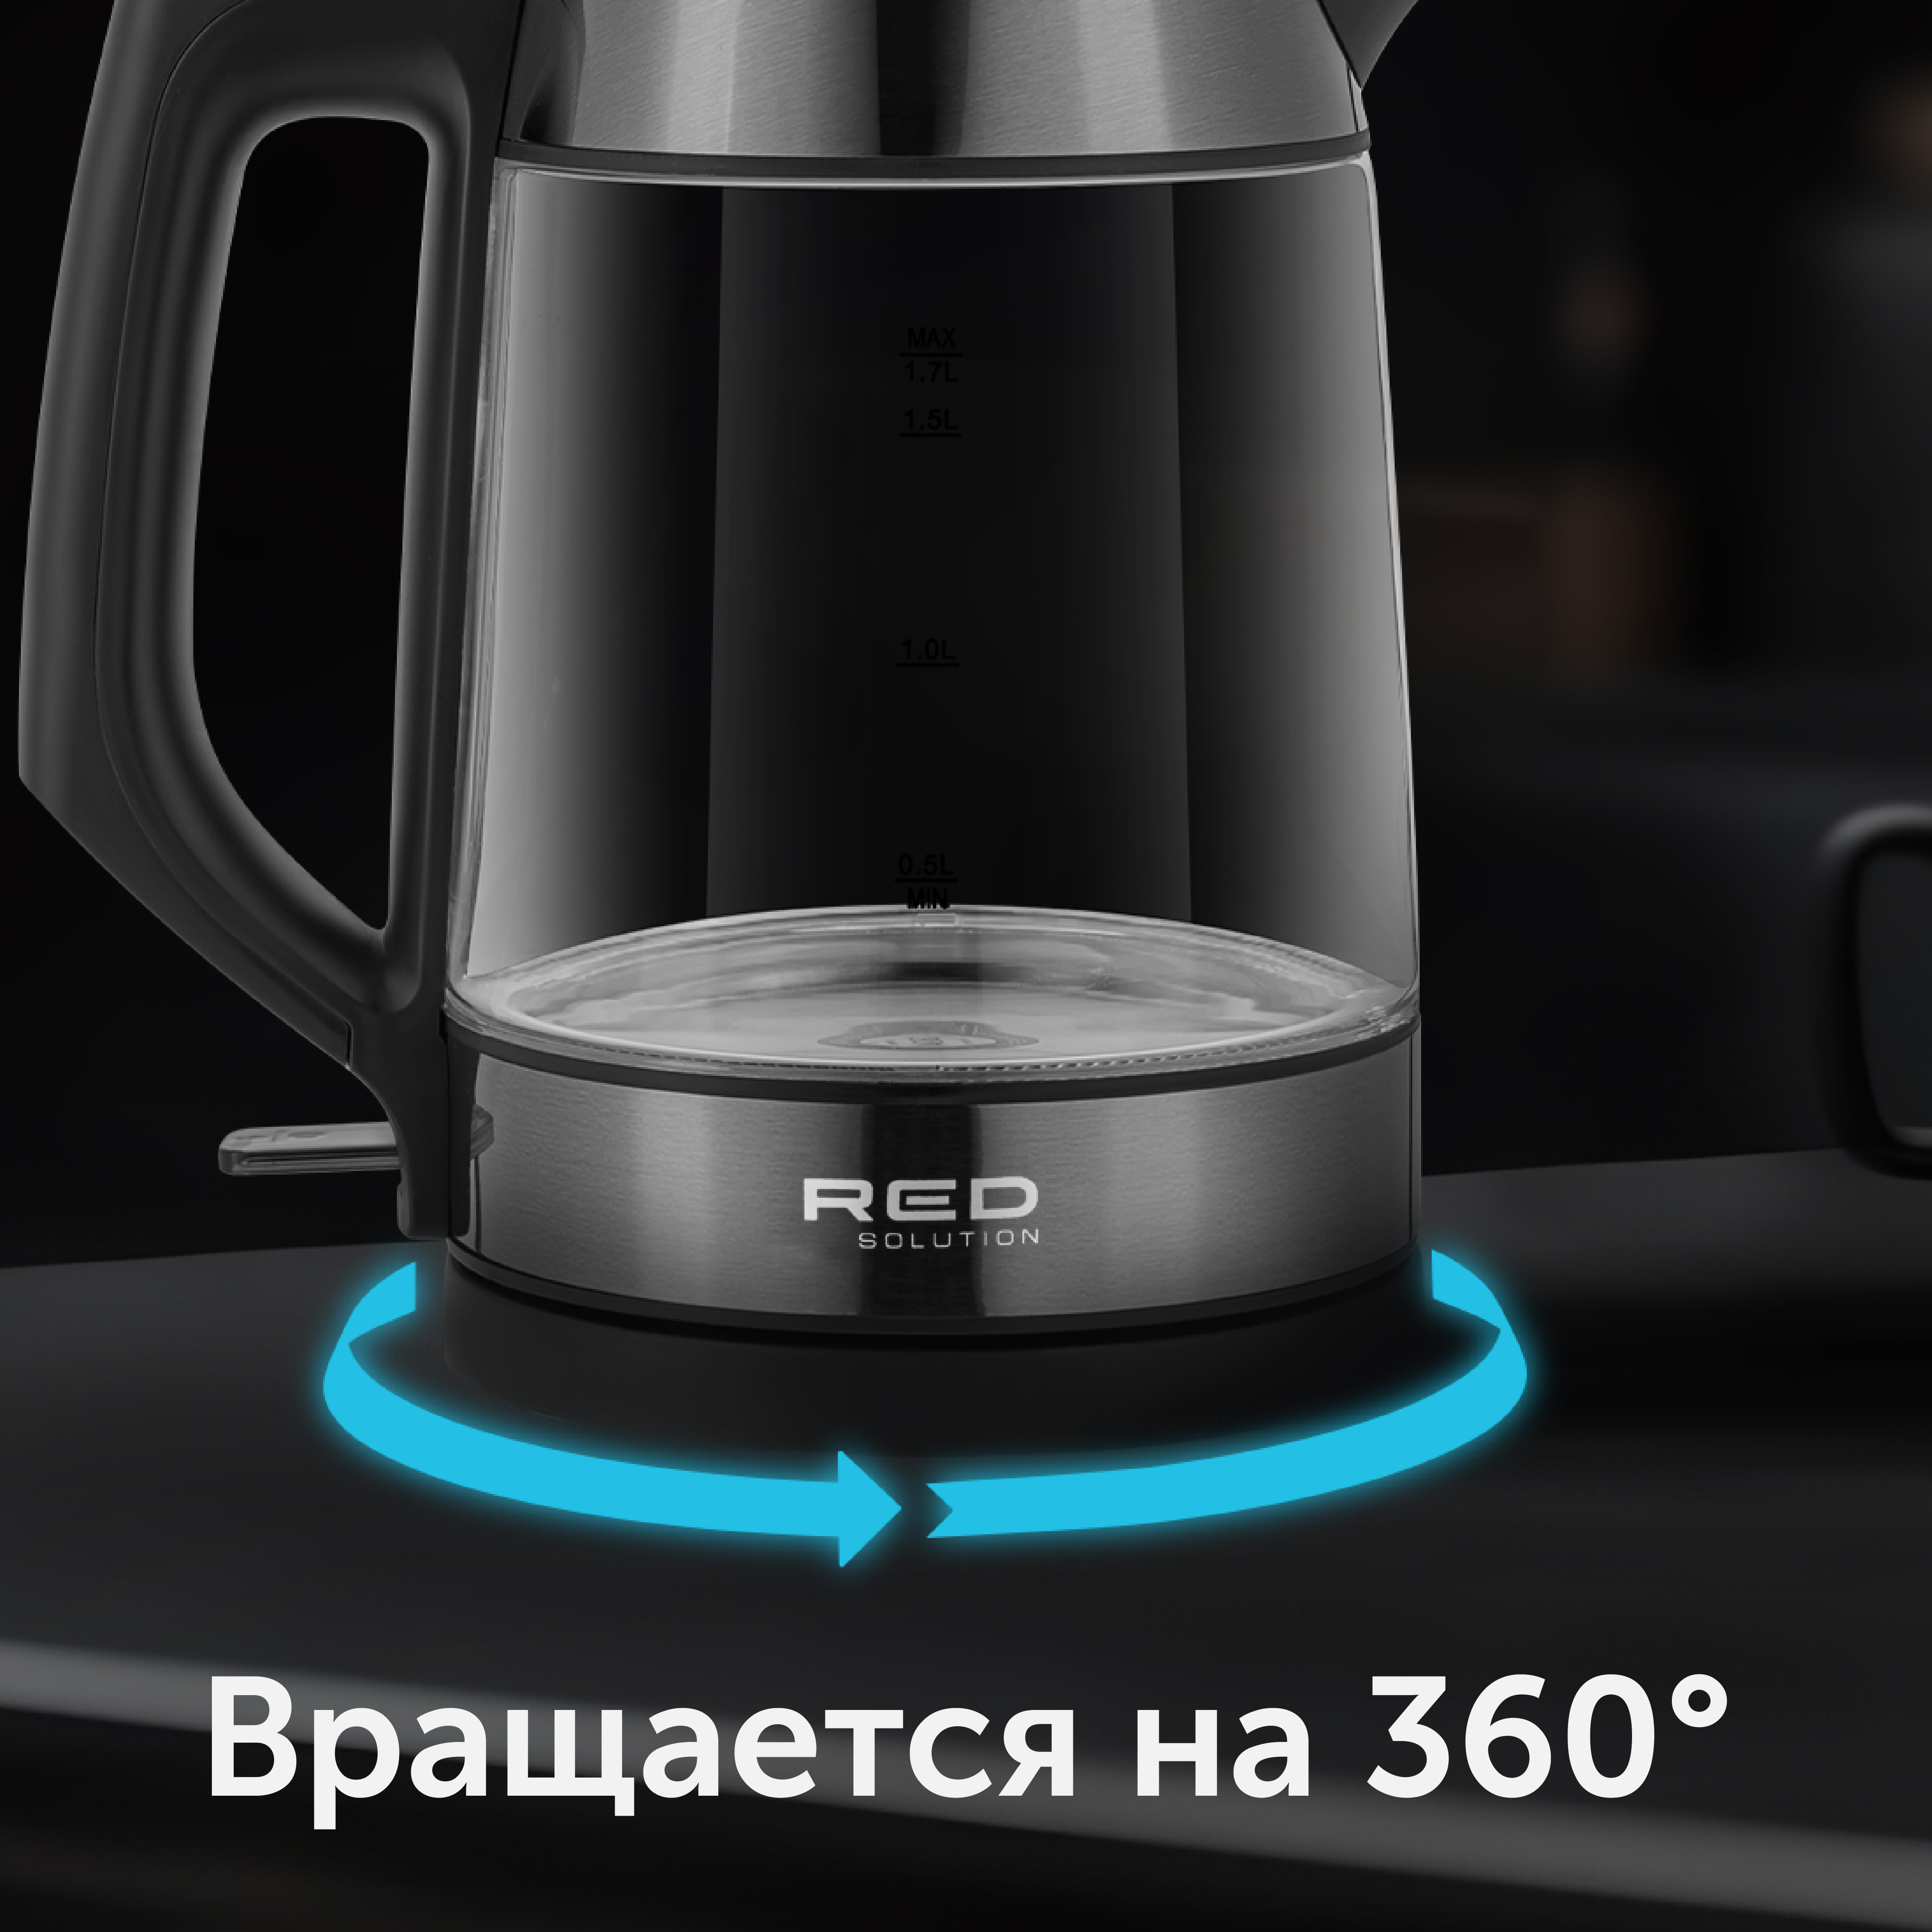 Чайник RED solution RK-G194